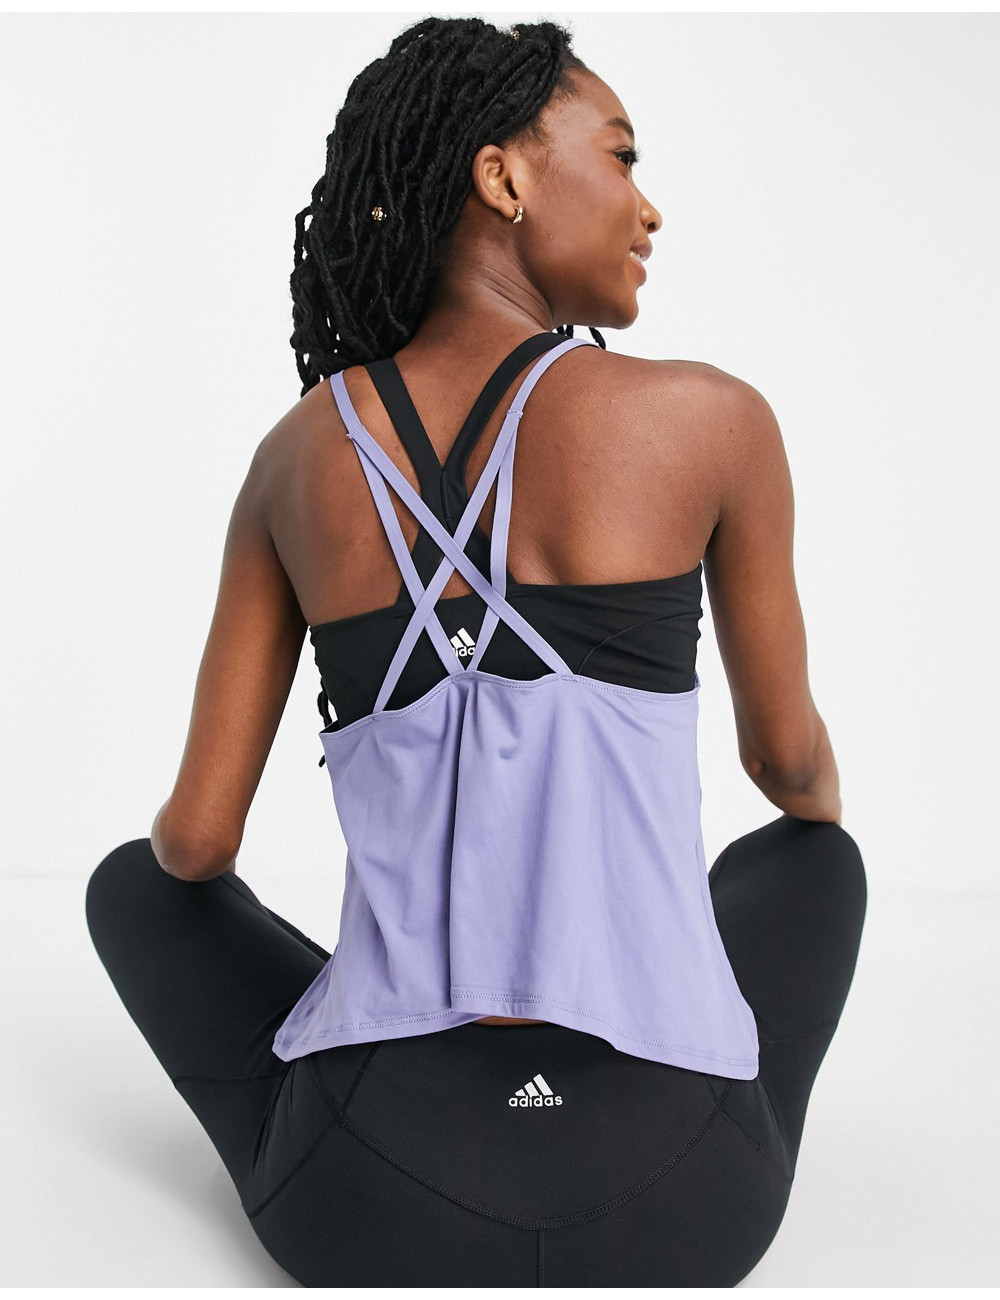 adidas Yoga top with back...